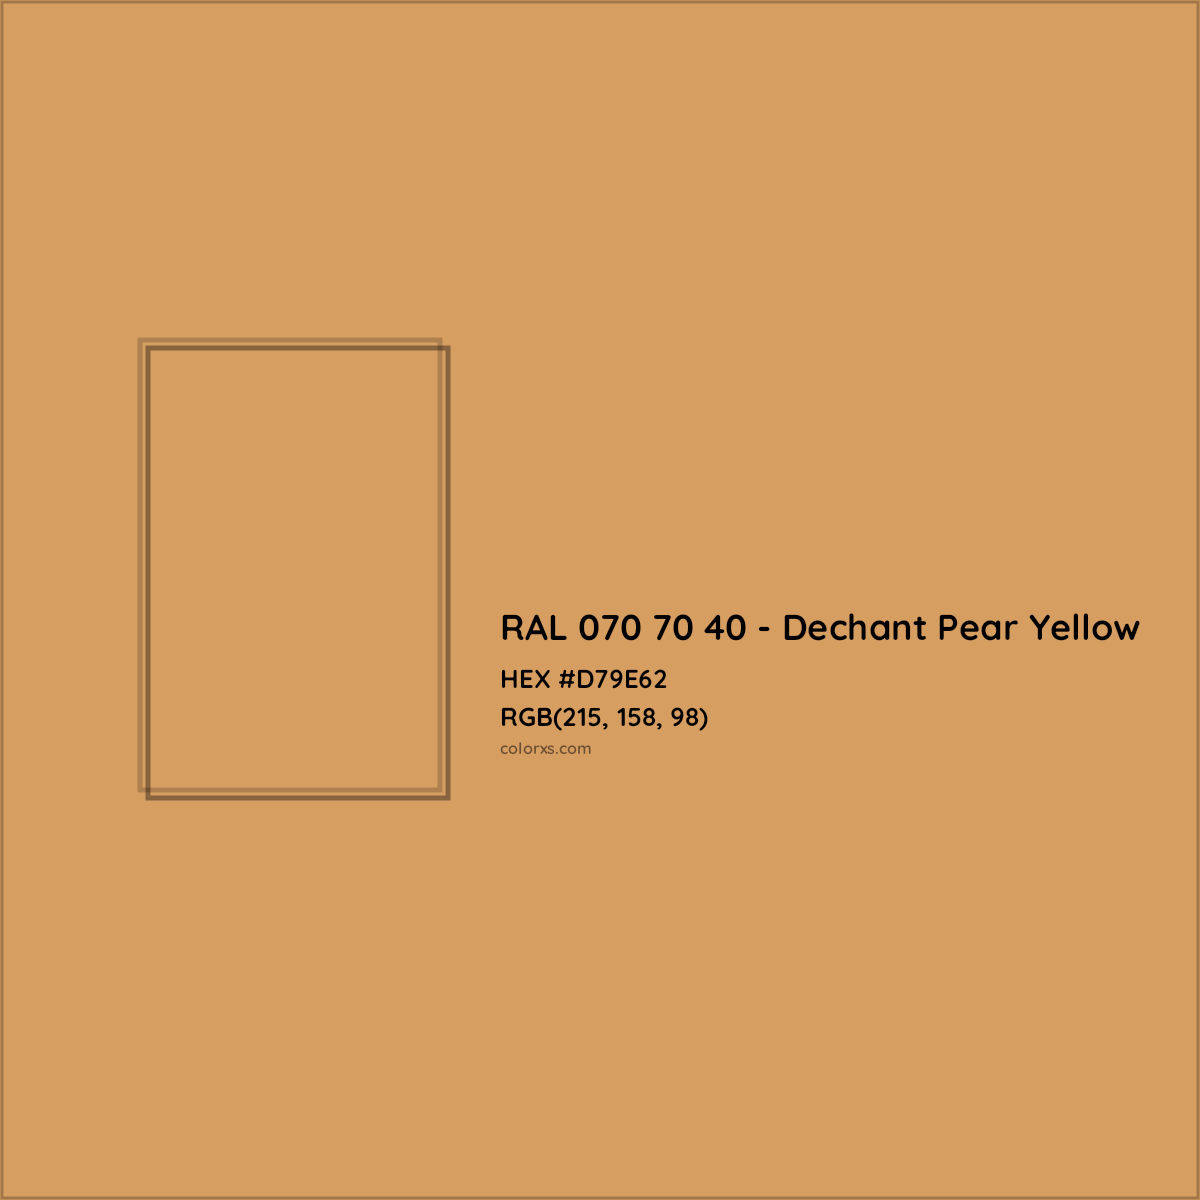 HEX #D79E62 RAL 070 70 40 - Dechant Pear Yellow CMS RAL Design - Color Code